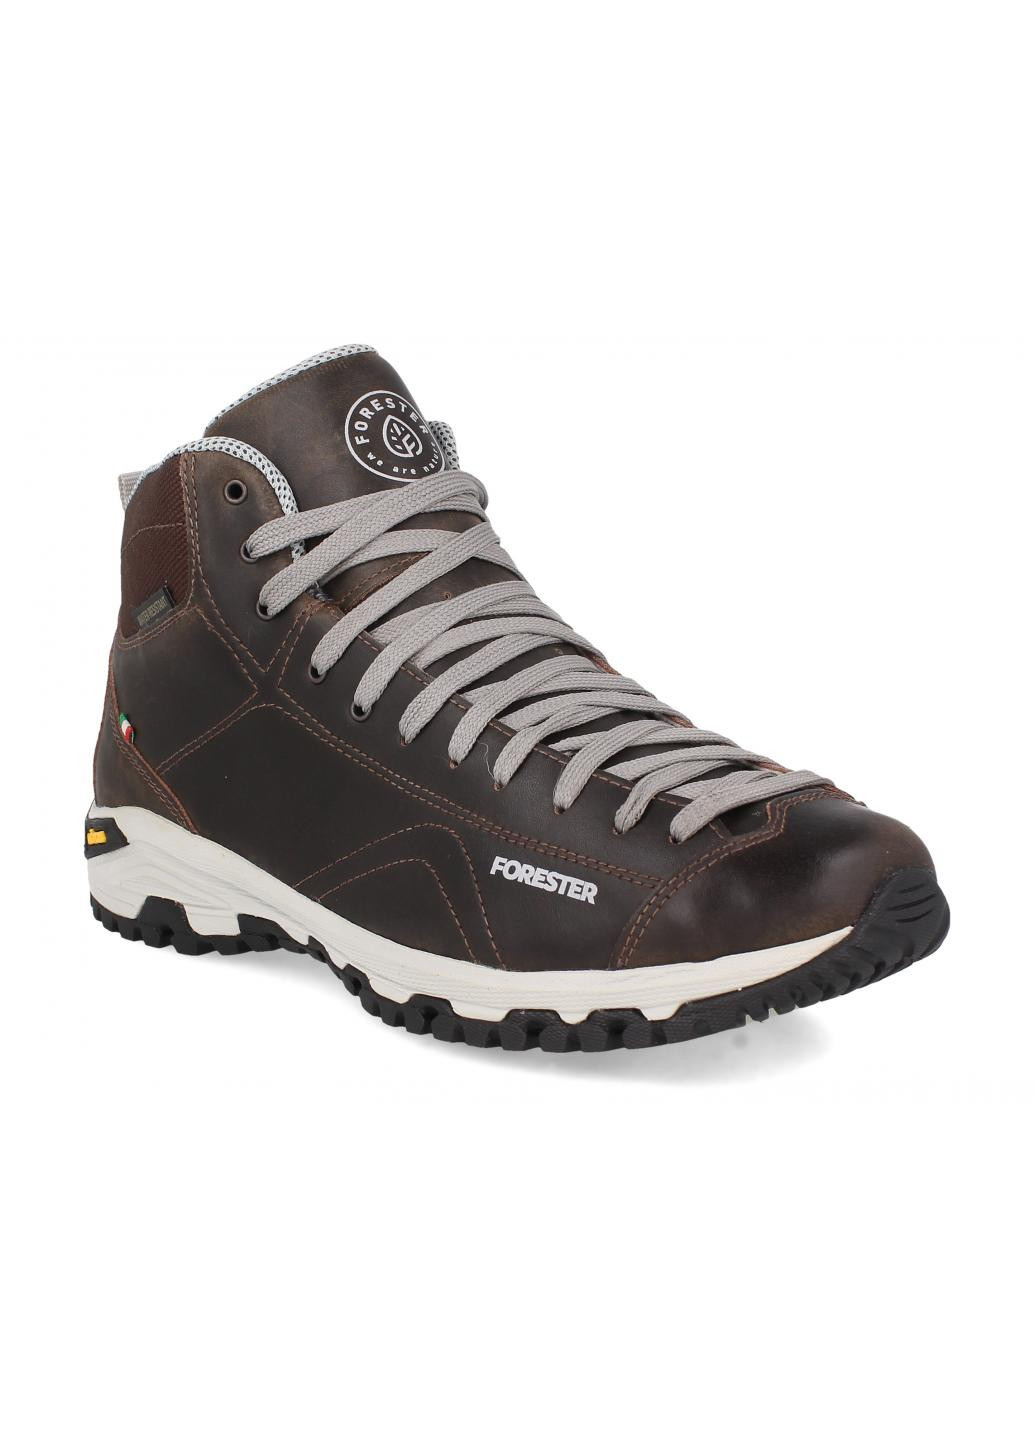 Коричневые зимние мужские ботинки brown vibram 247951-45 made in italy Forester